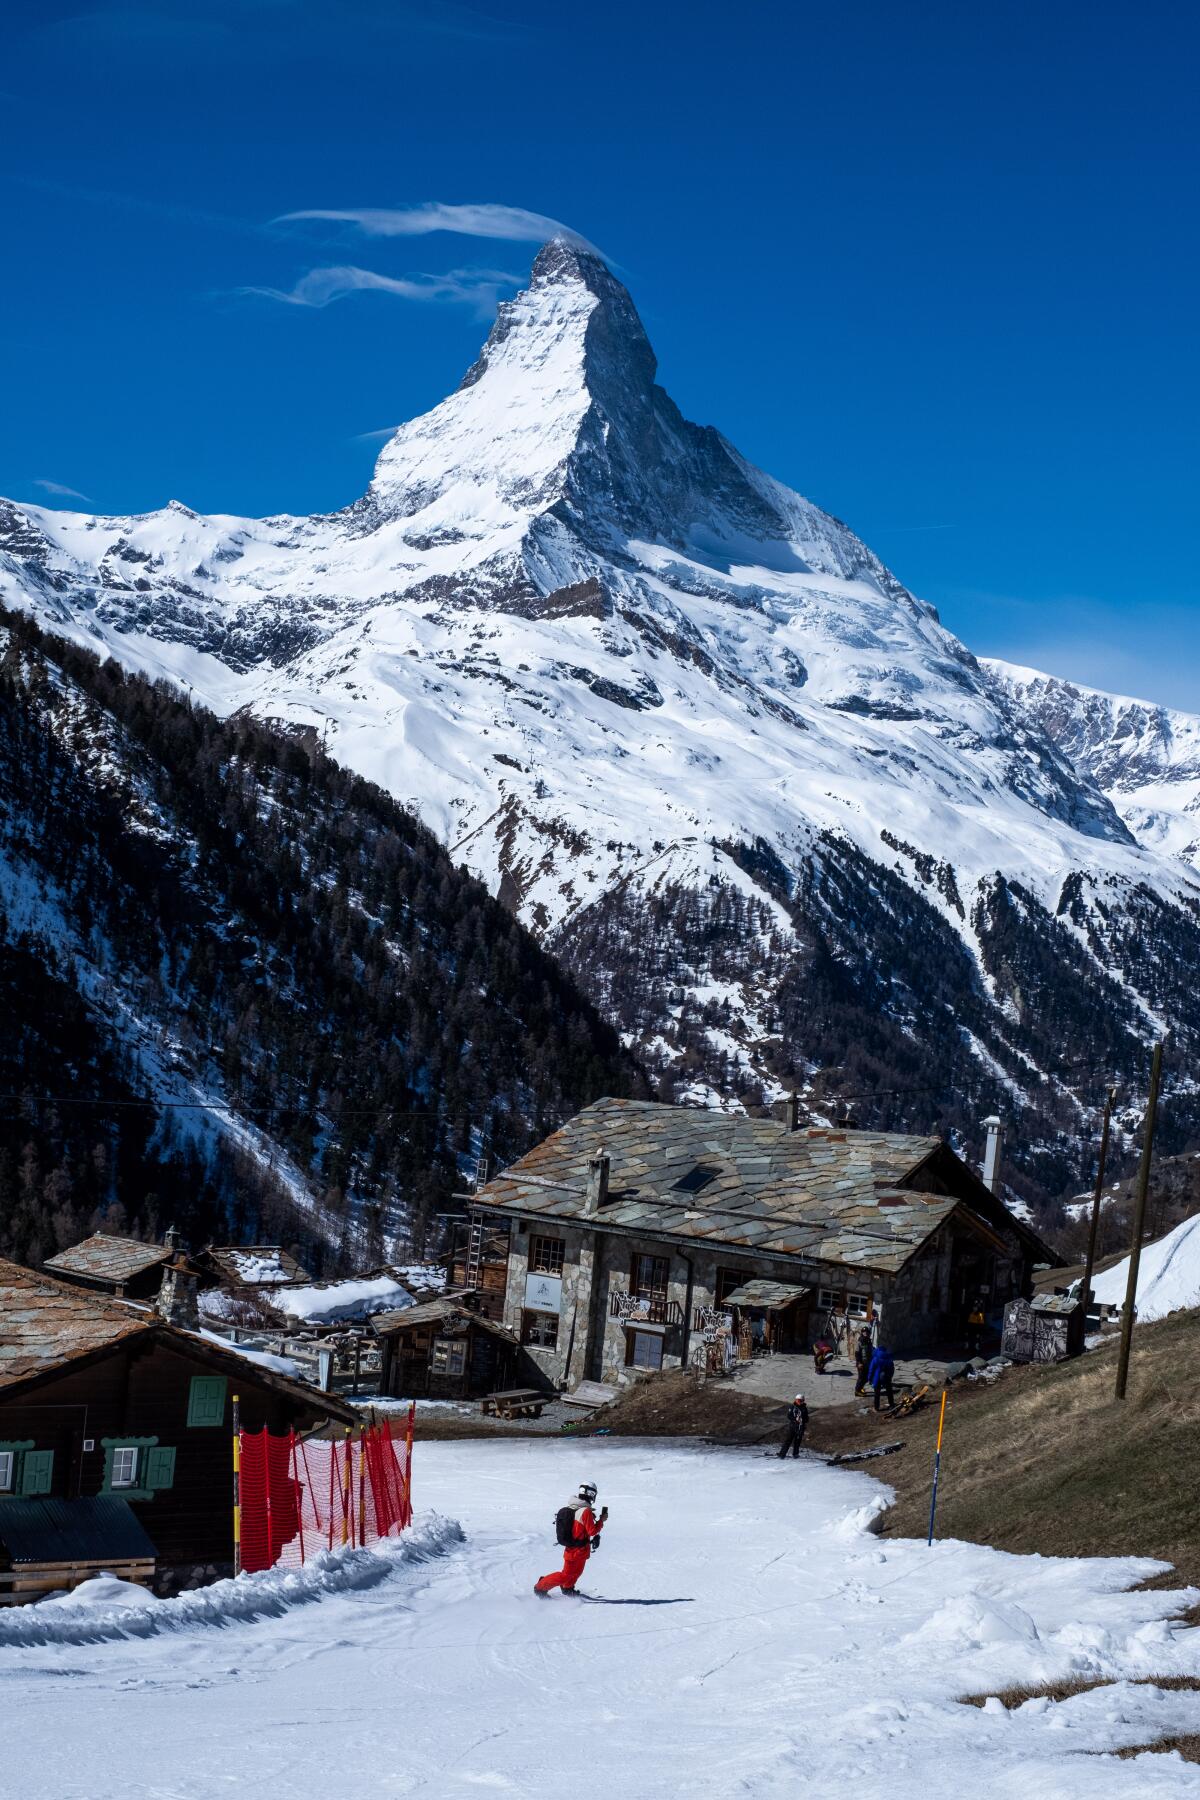 A snowboarder heads through Alpine villages below the Matterhorn.